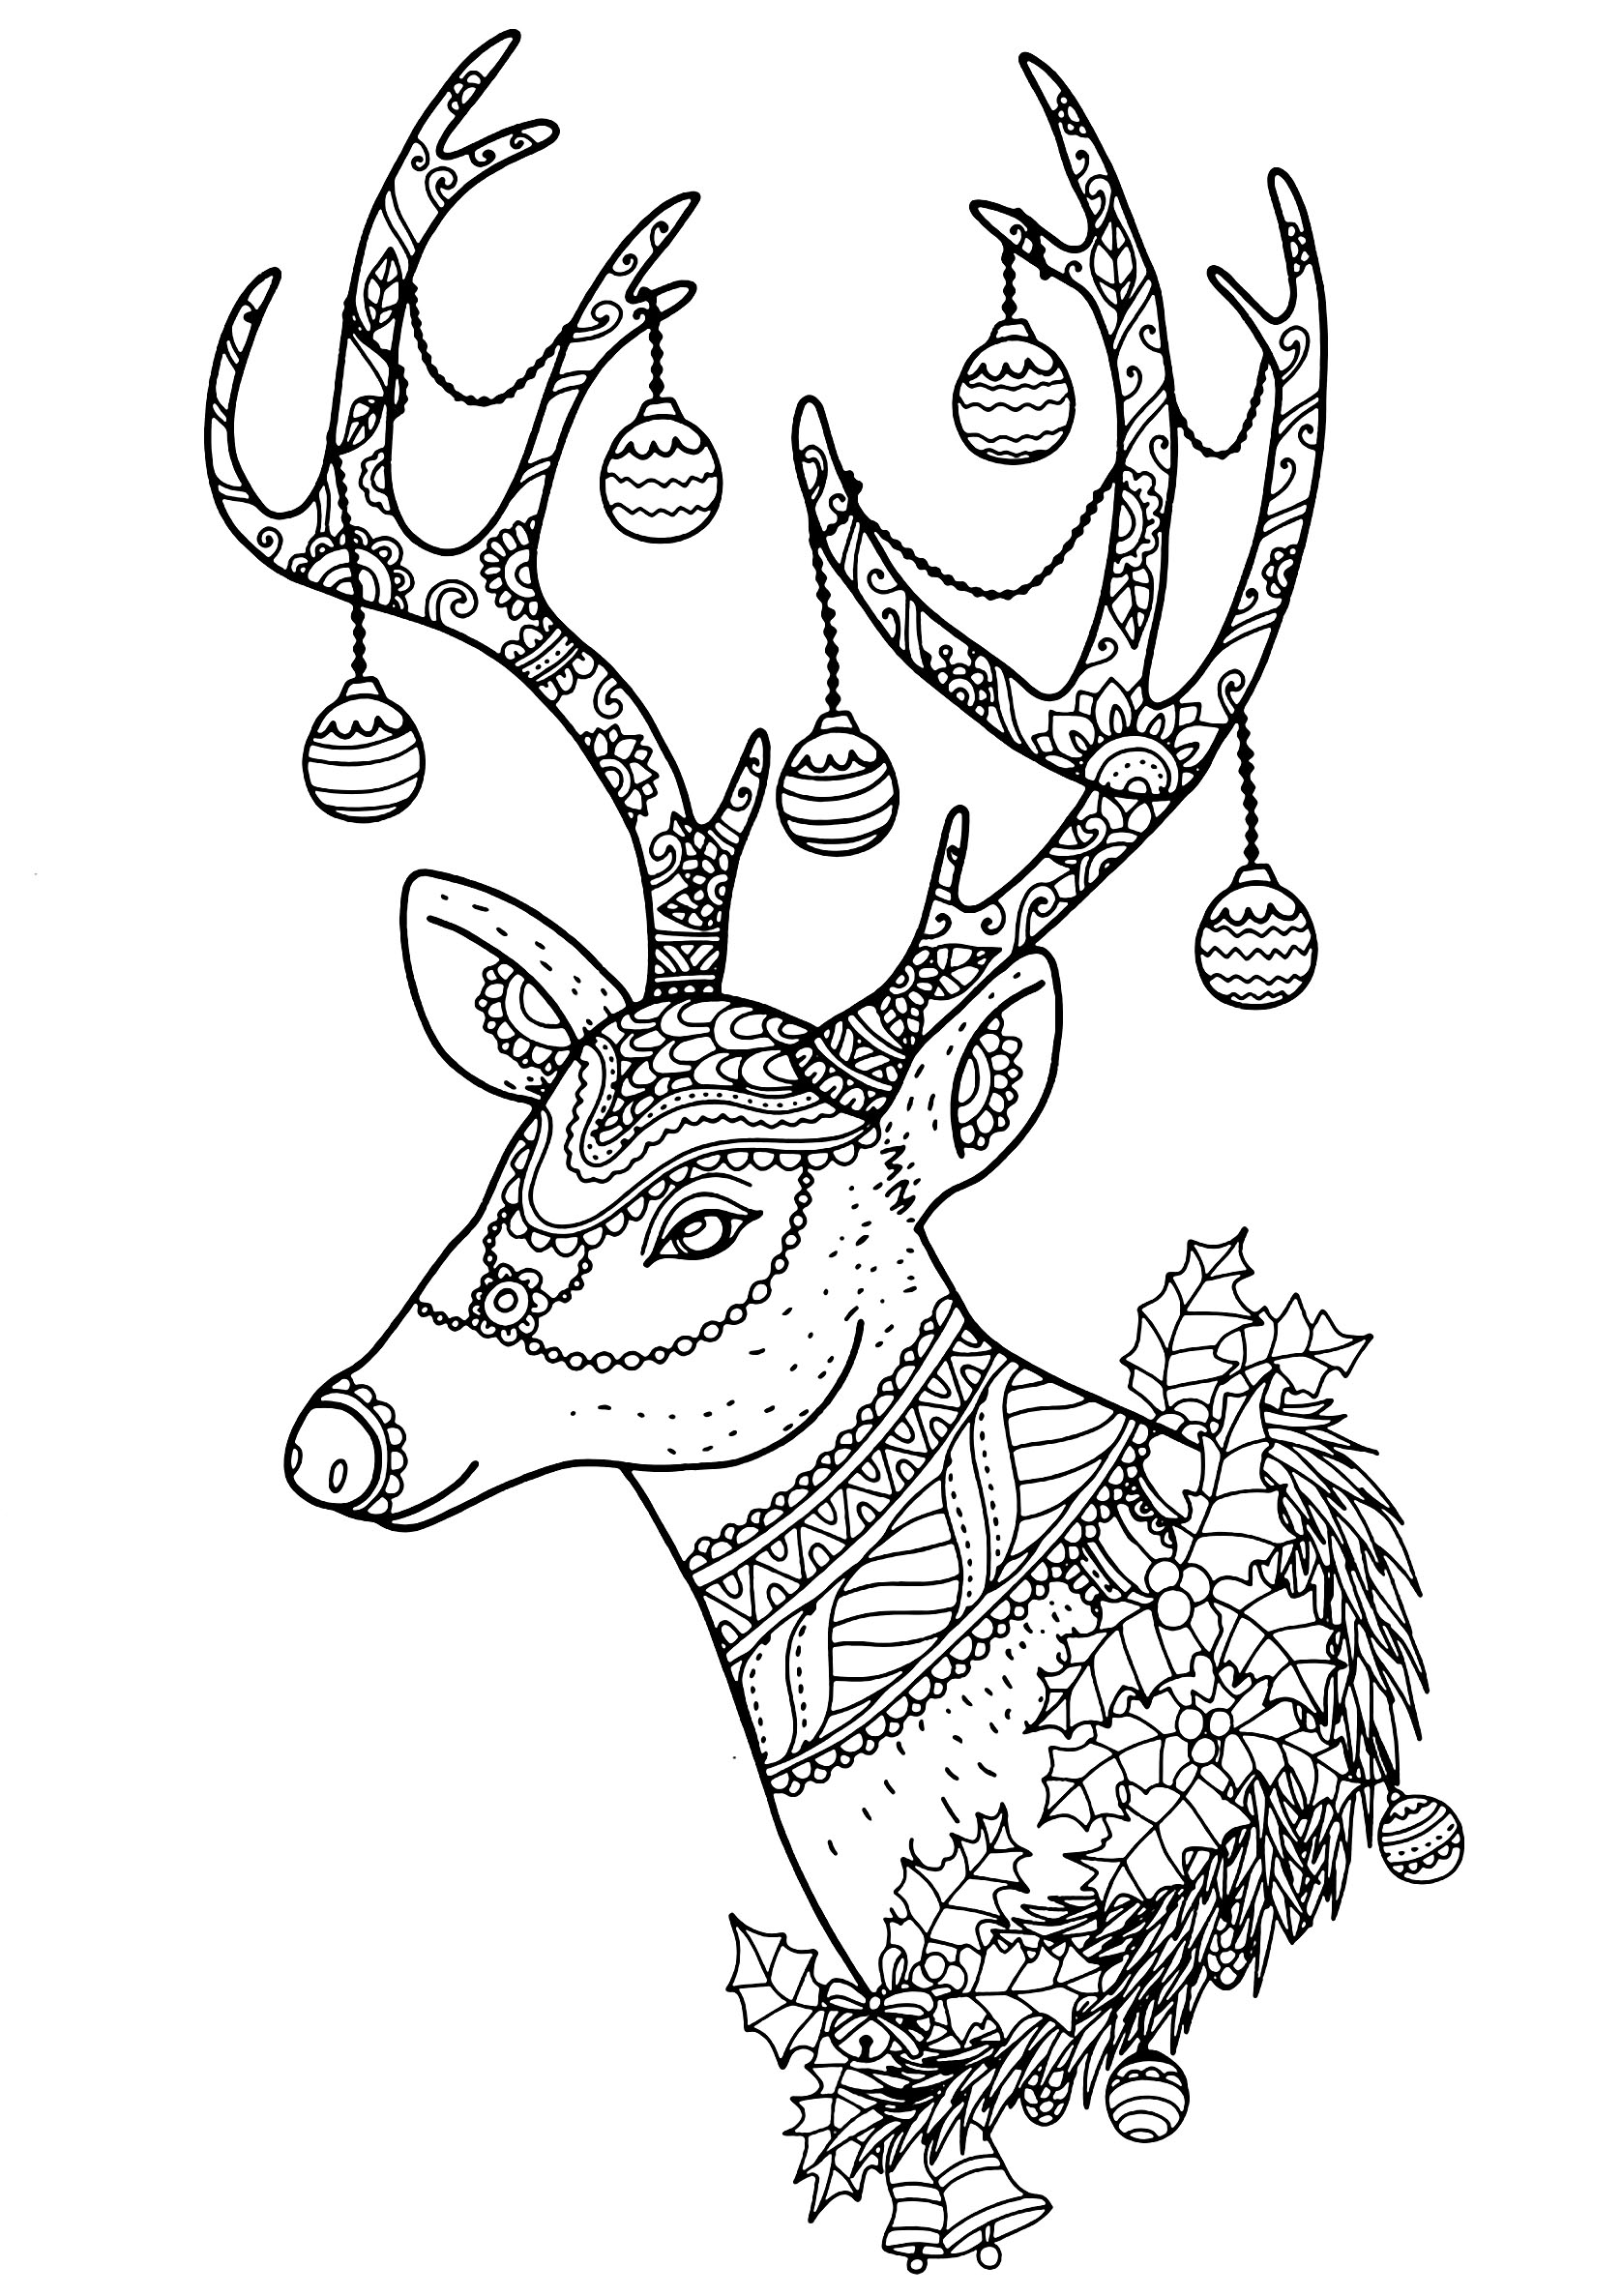 Christmas reindeer nontachai hengtragool - Christmas - Coloring pages for adults